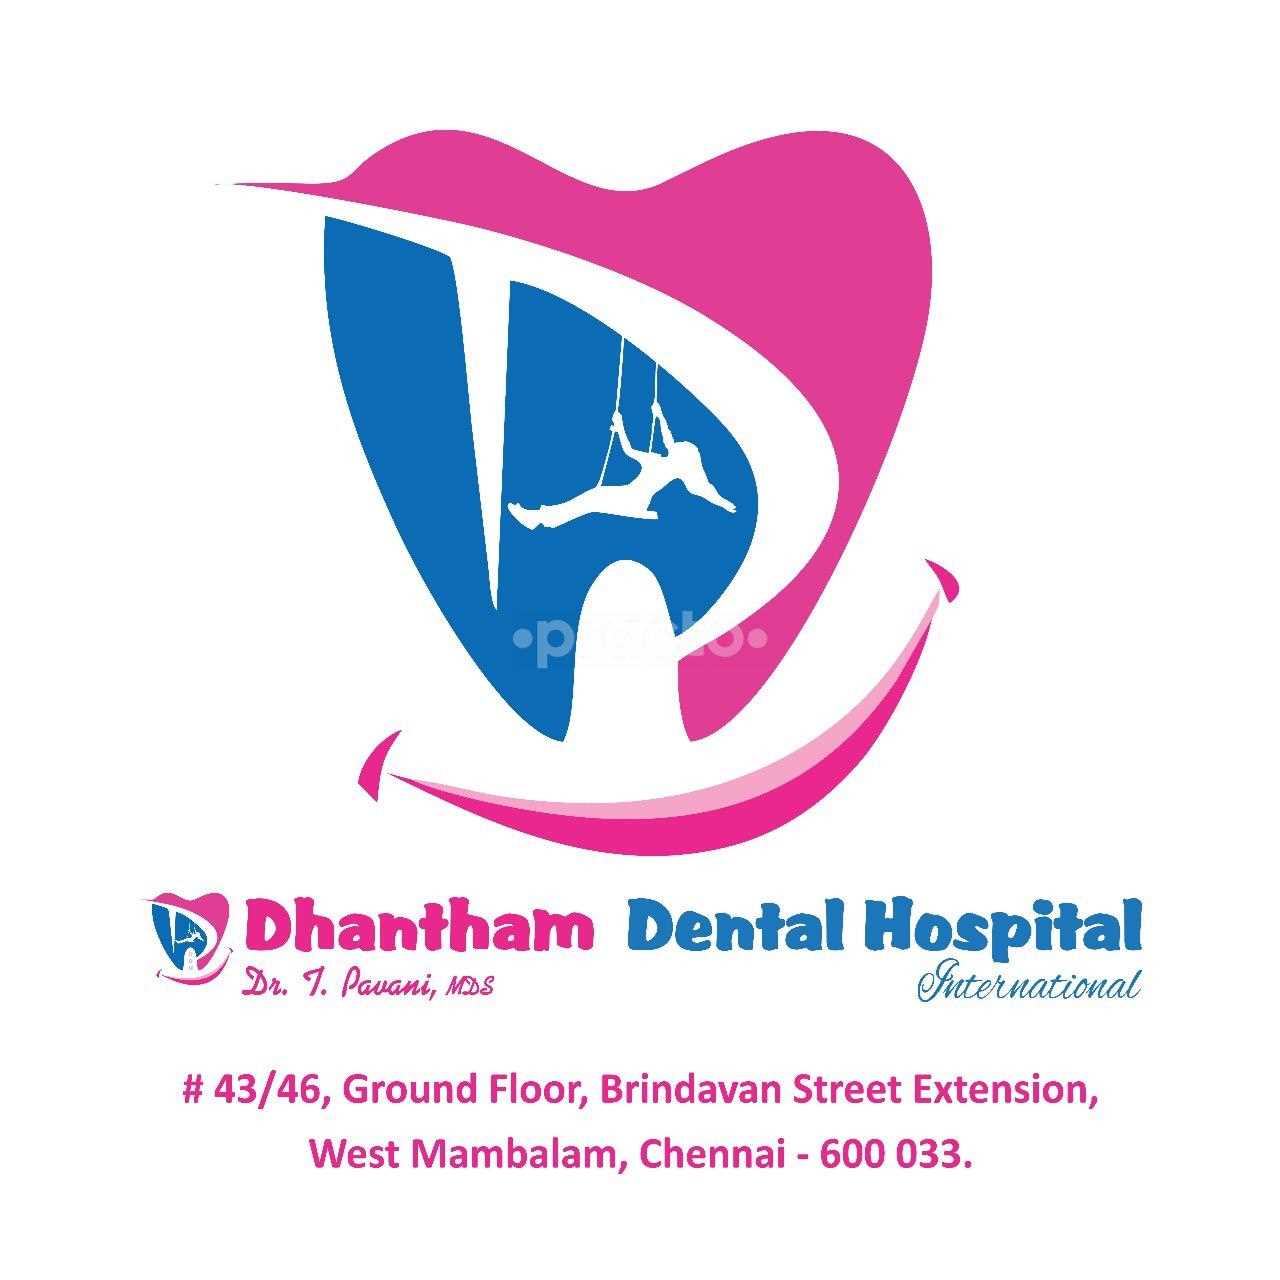 Dhantham Dental Hospital International